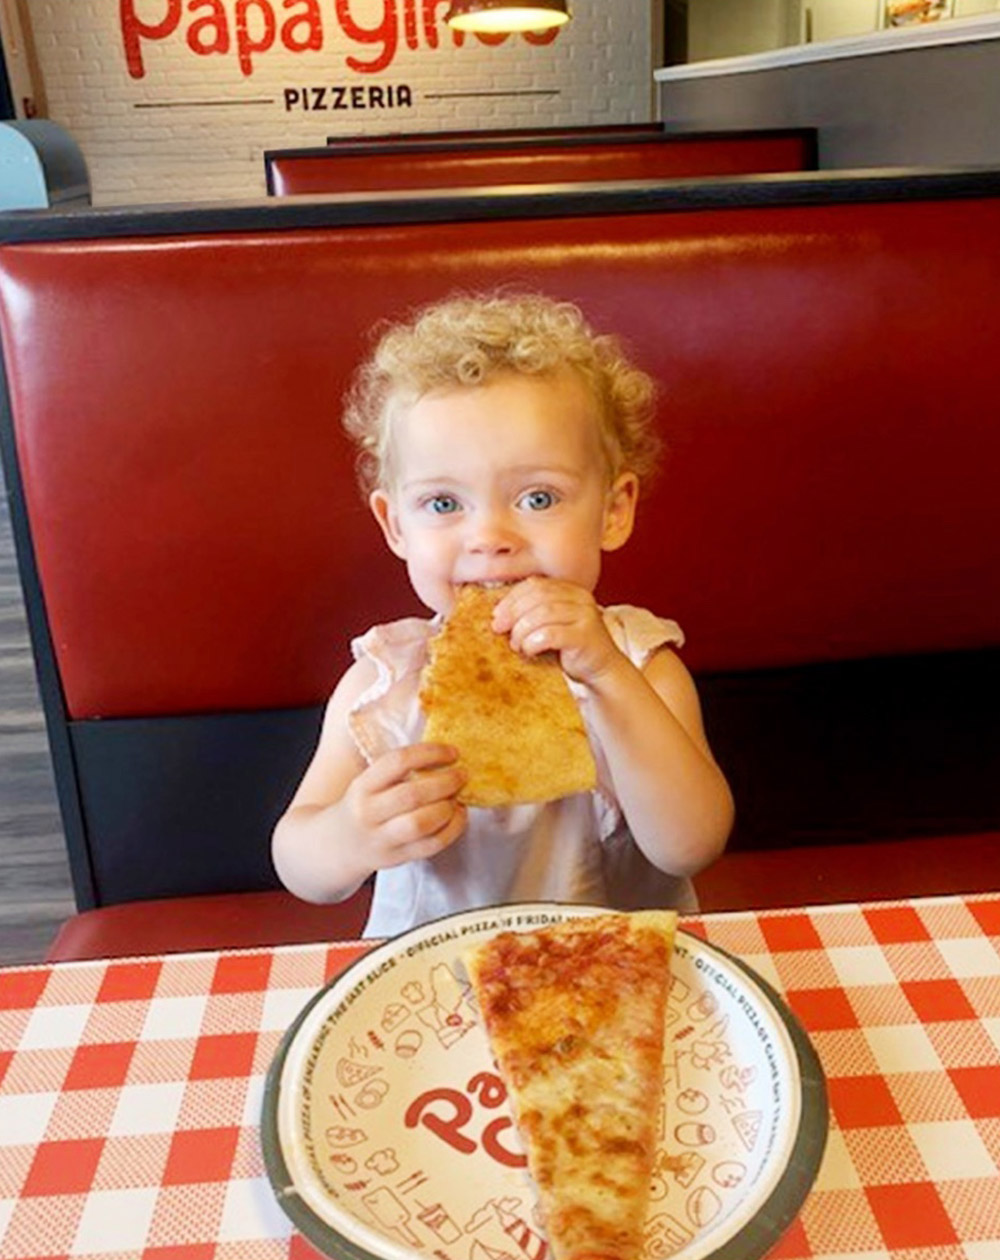 Child enjoying Papa Gino's pizza